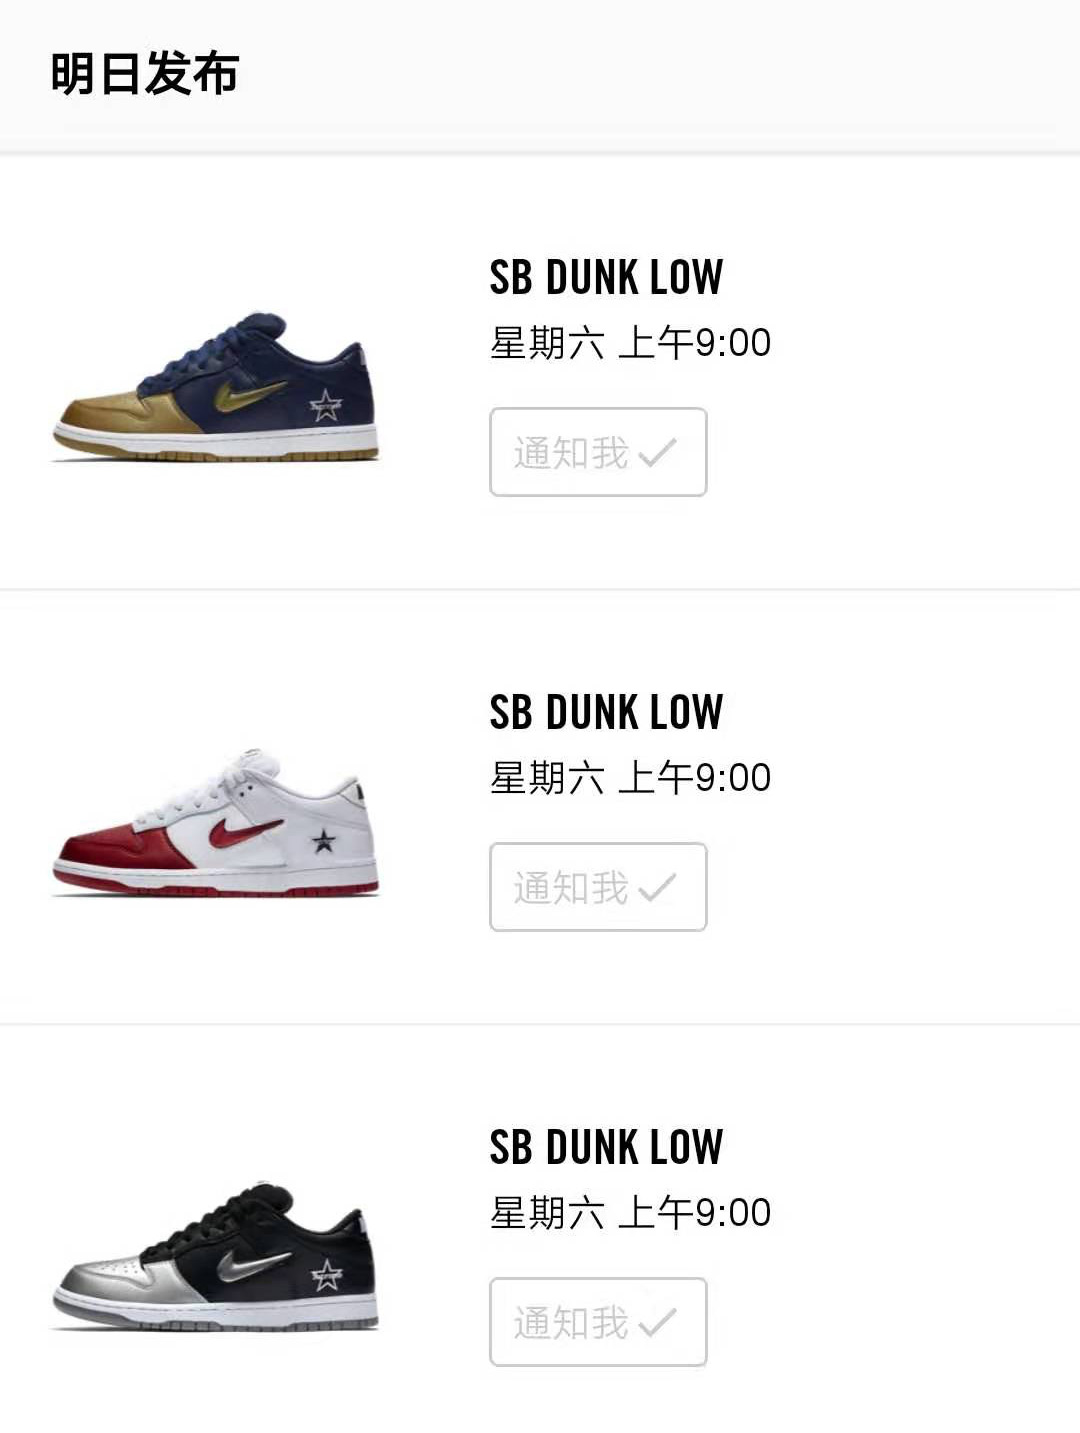 Supreme,Nike,Dunk SB  三款配色明天发售！中国区 Supreme x Dunk Low 终于来了！